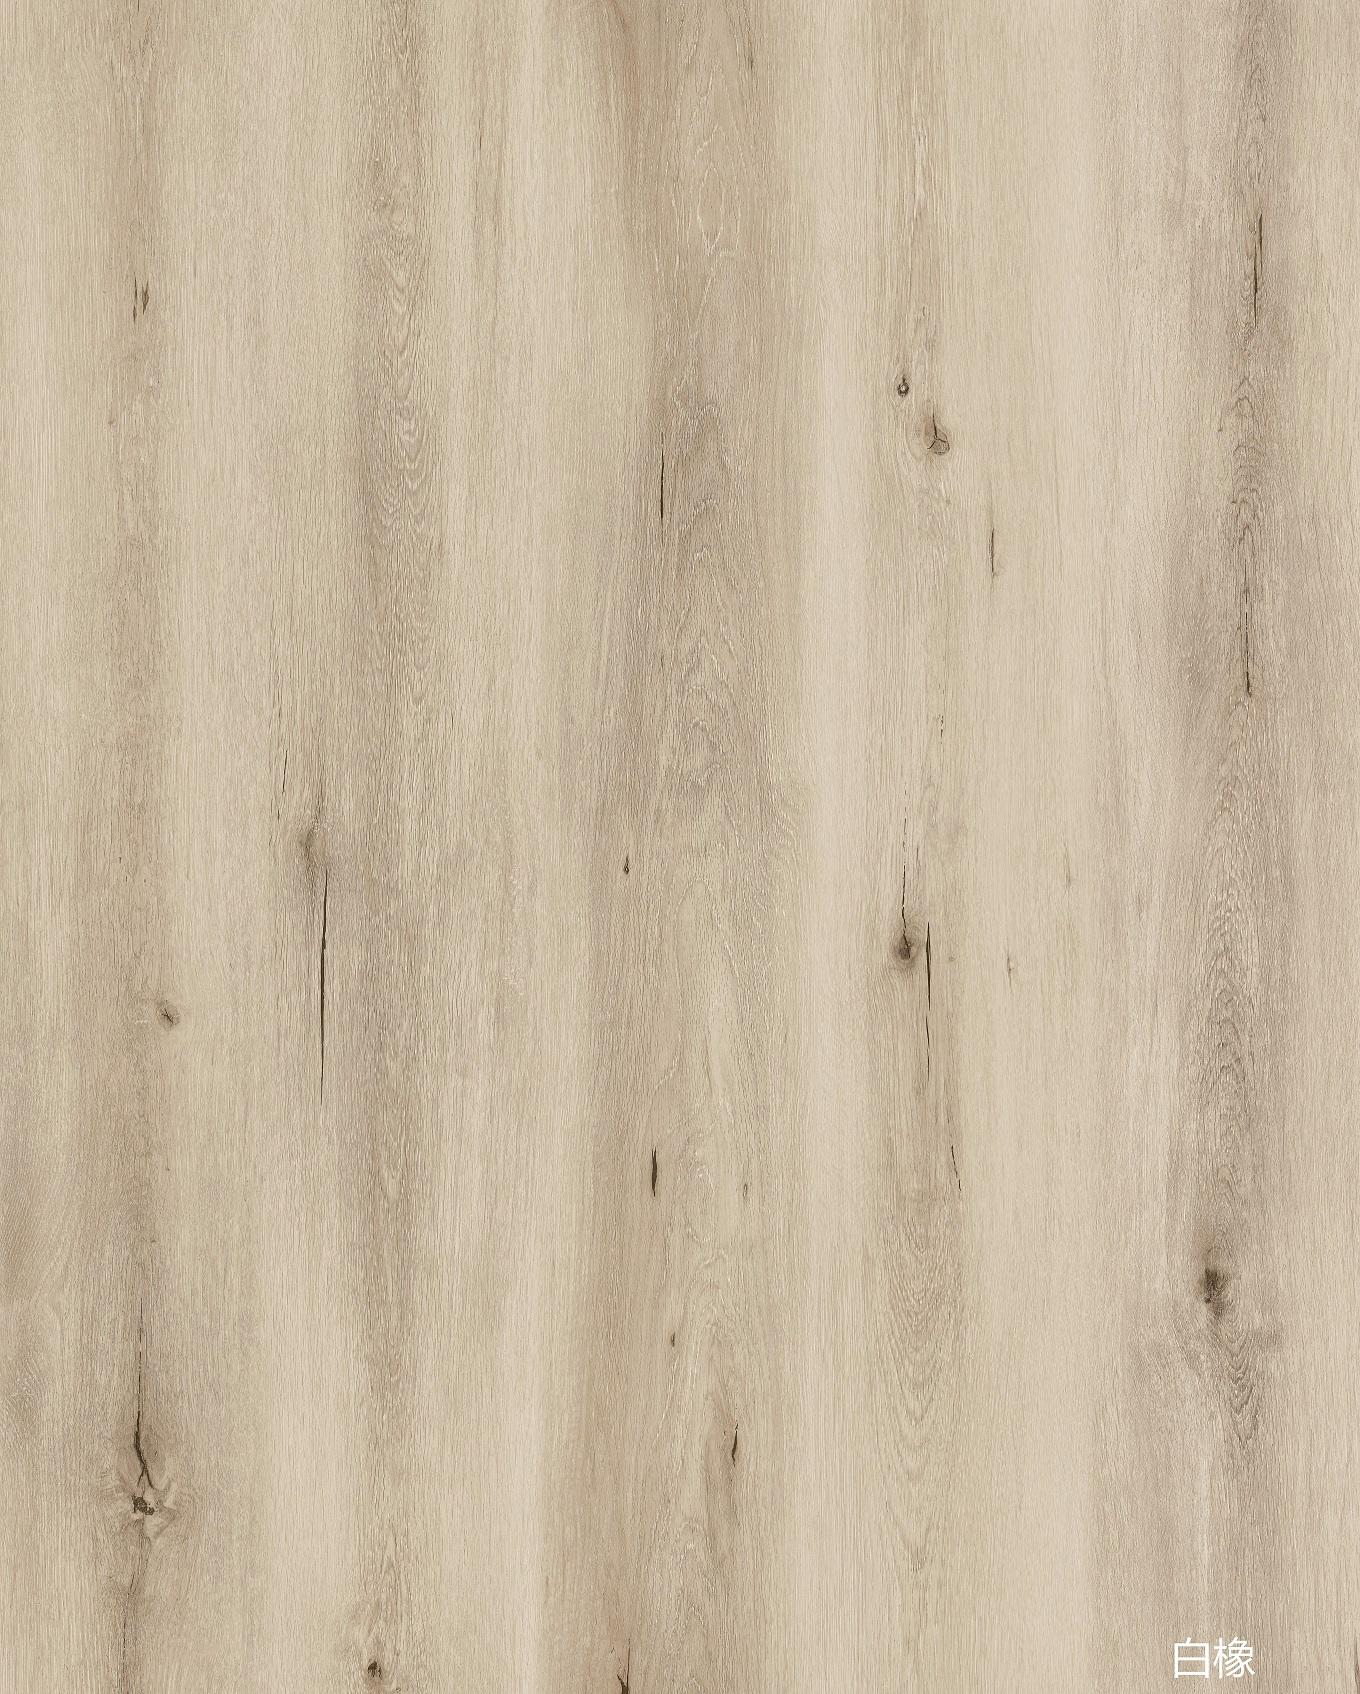 Durable Oak Color SPC flooring